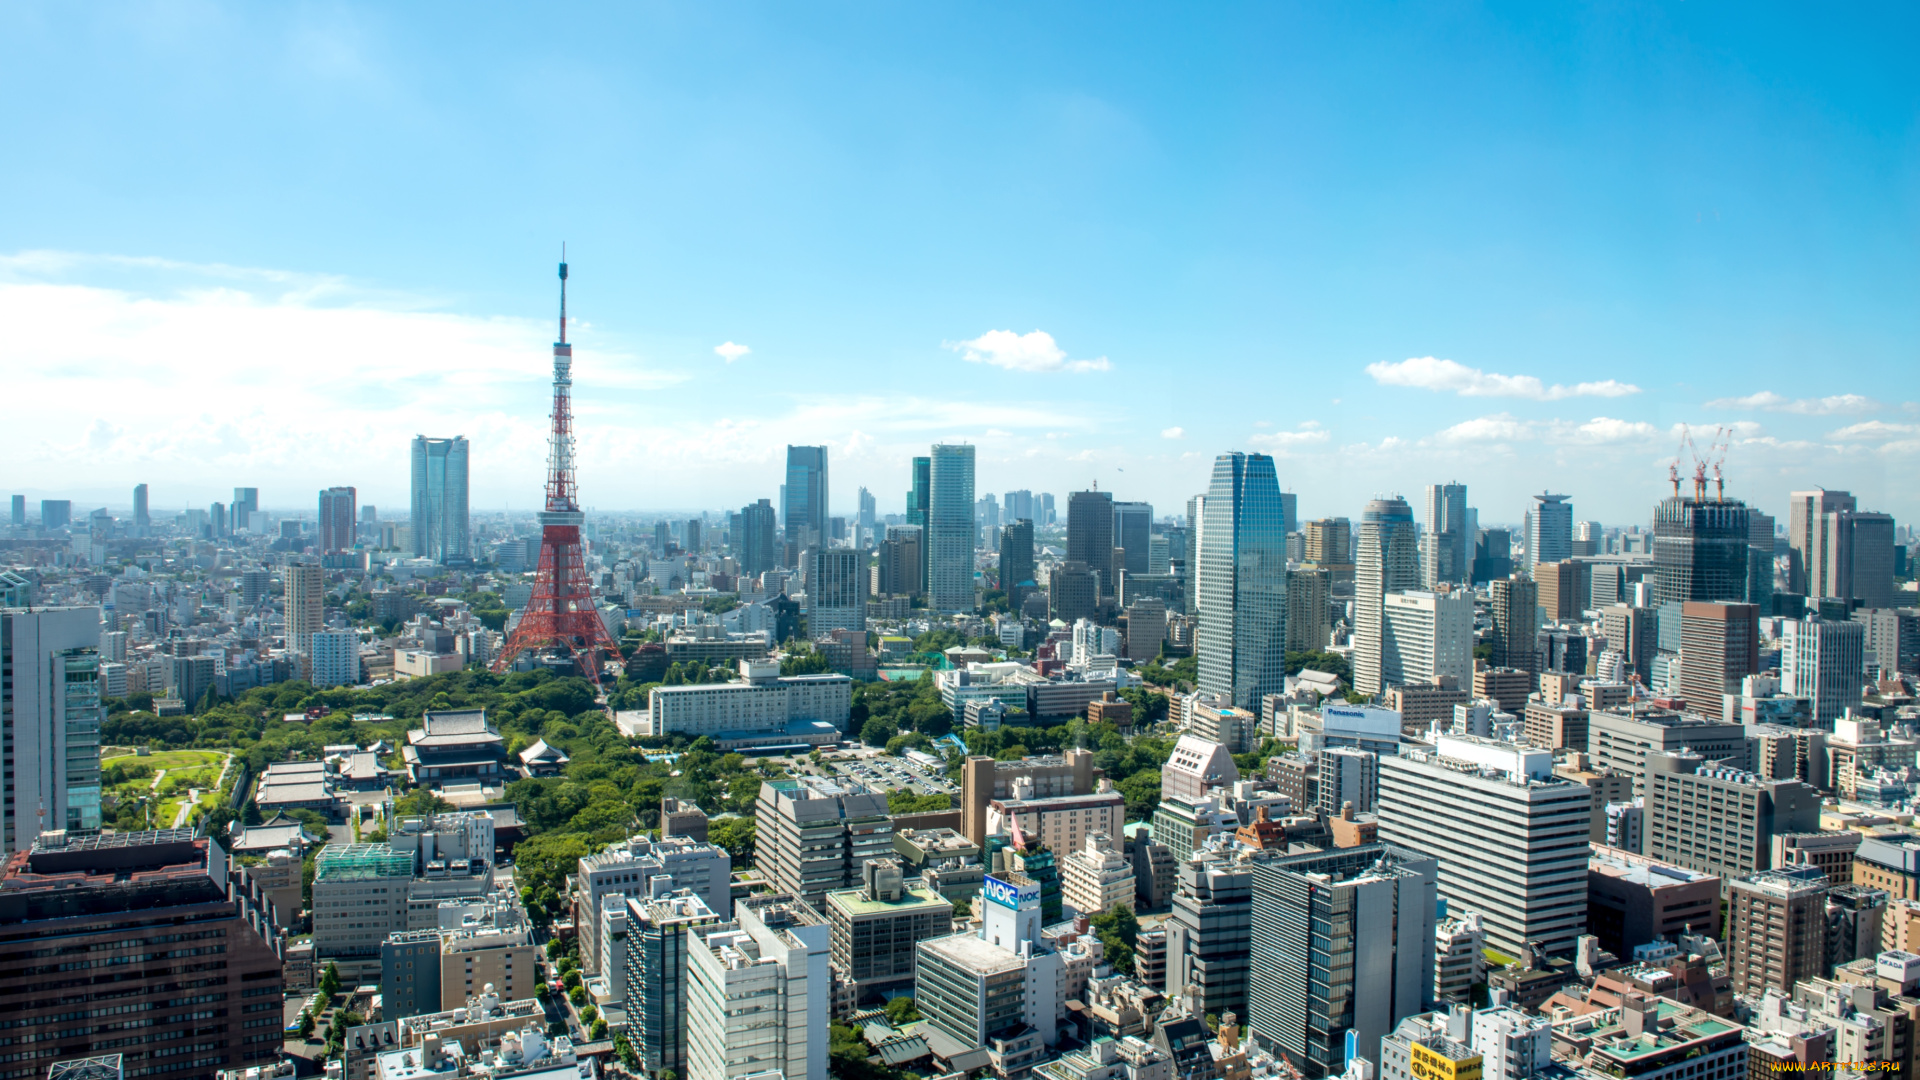 города, токио, Япония, здания, телебашня, панорама